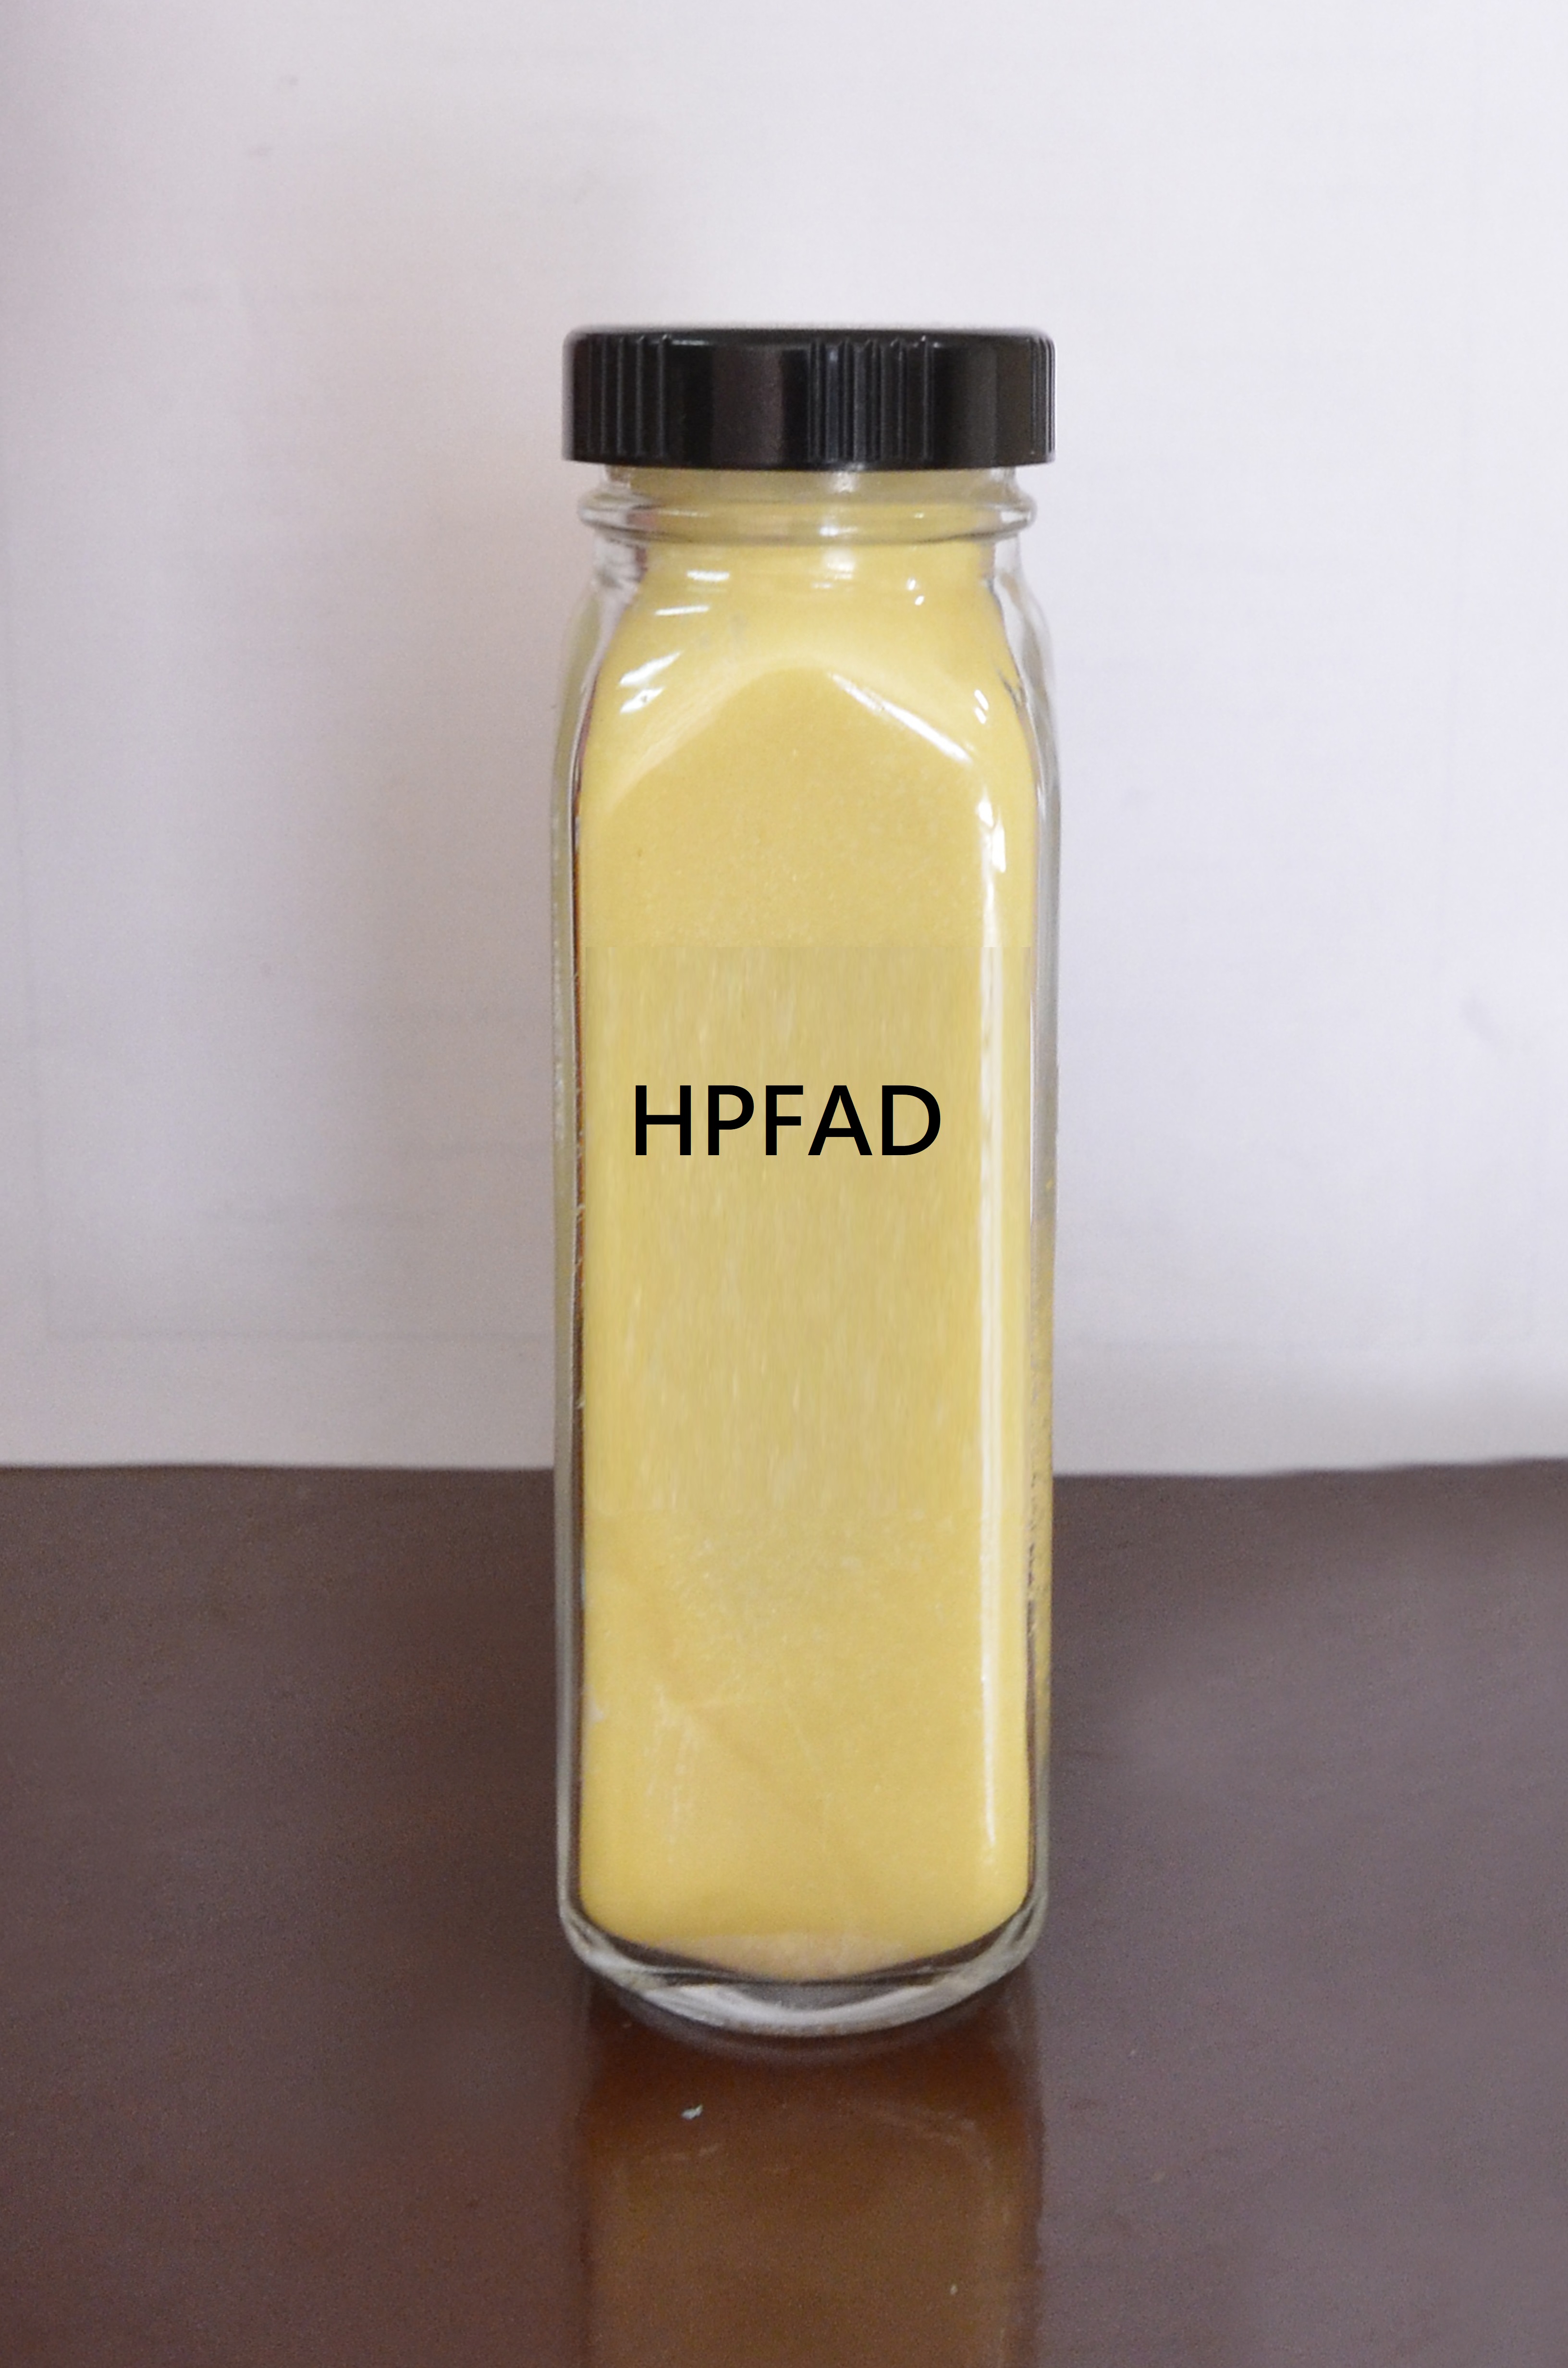 Hydrogenated PFAD